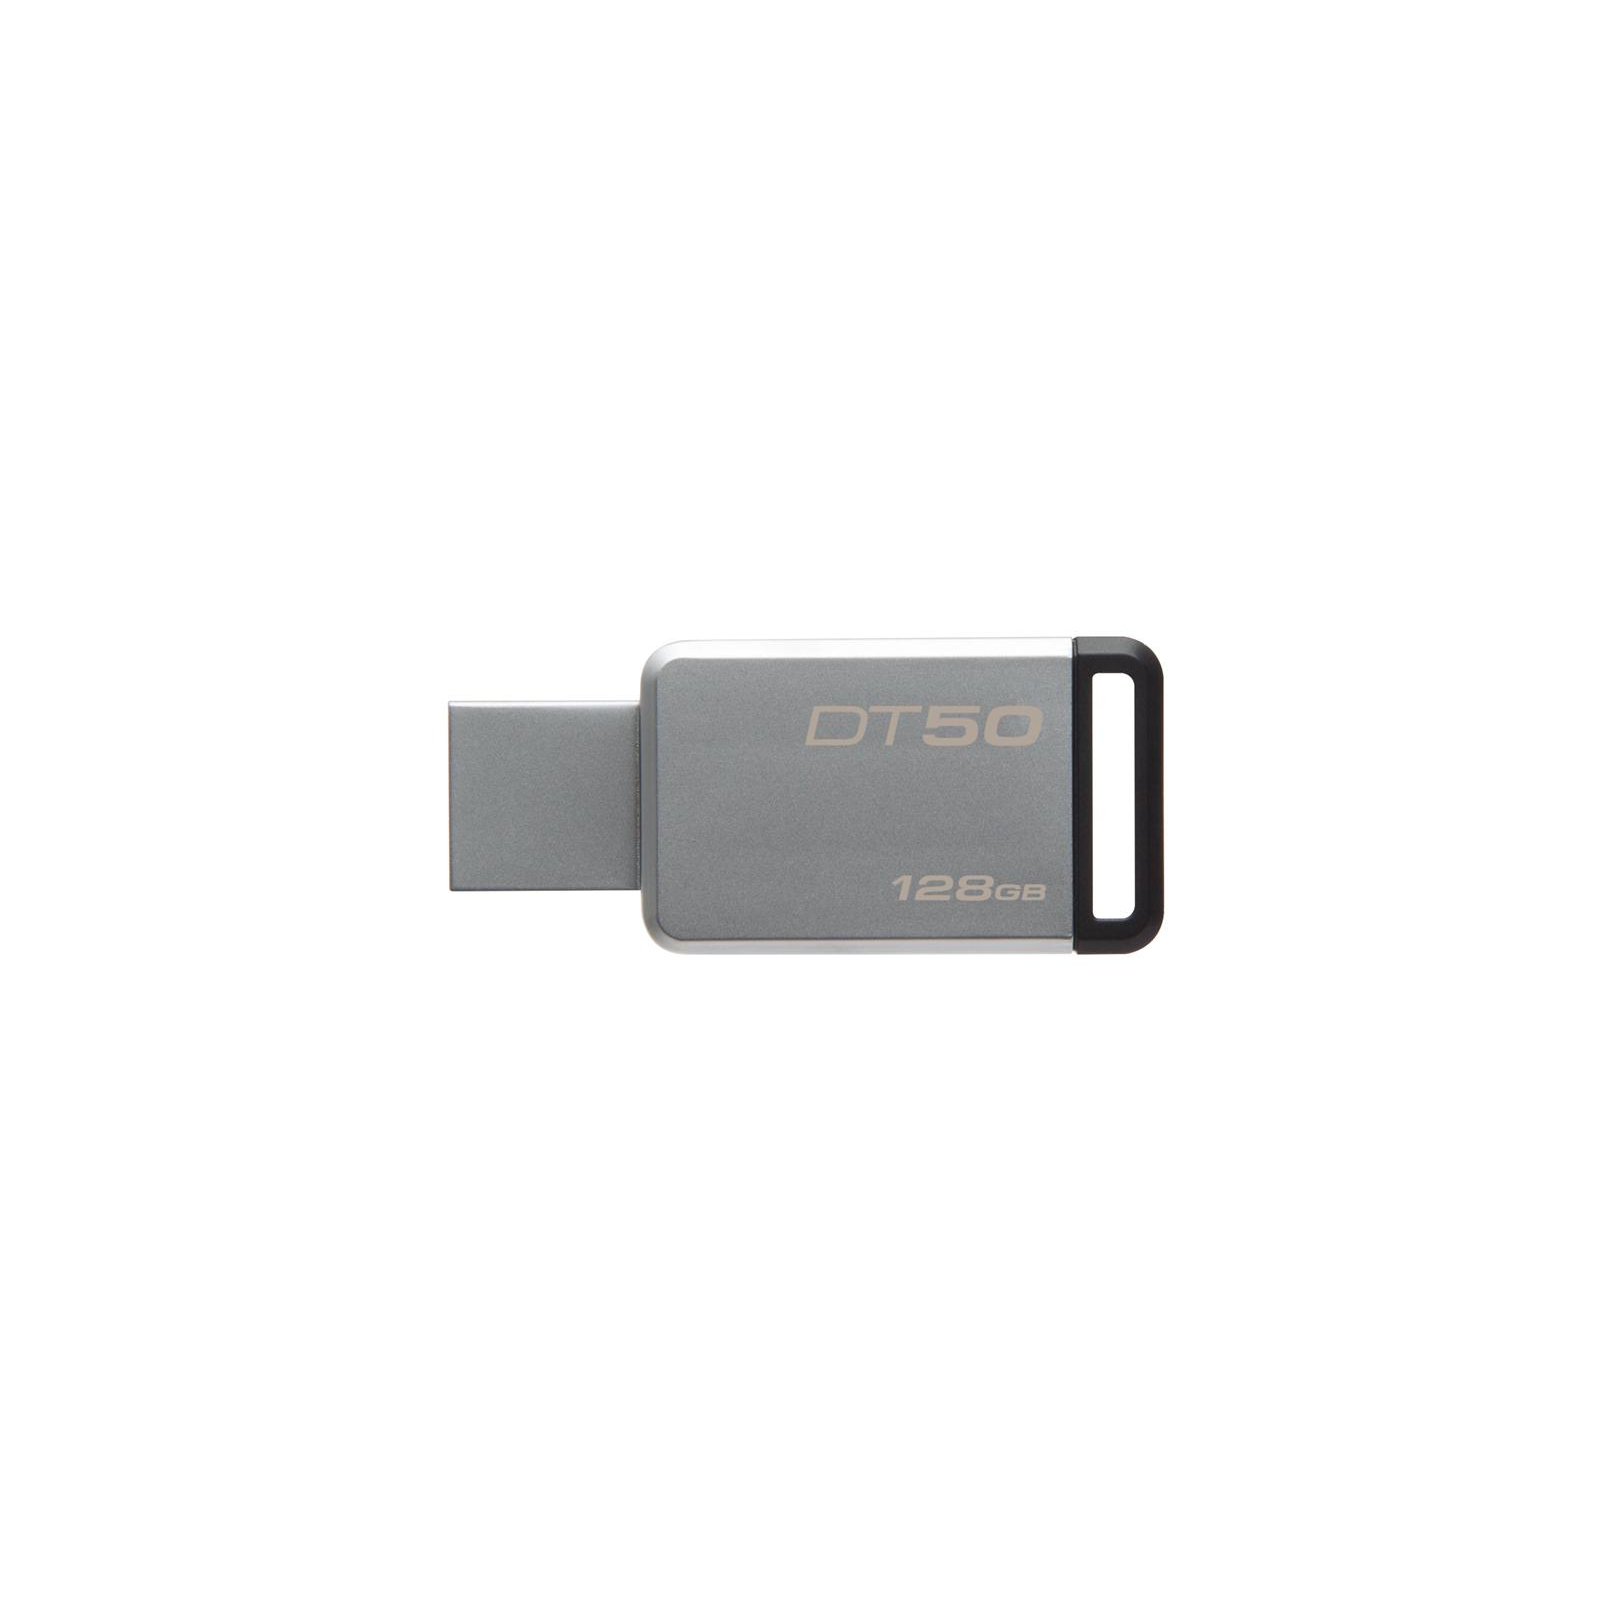 USB флеш накопичувач Kingston 8GB DT50 USB 3.1 (DT50/8GB)